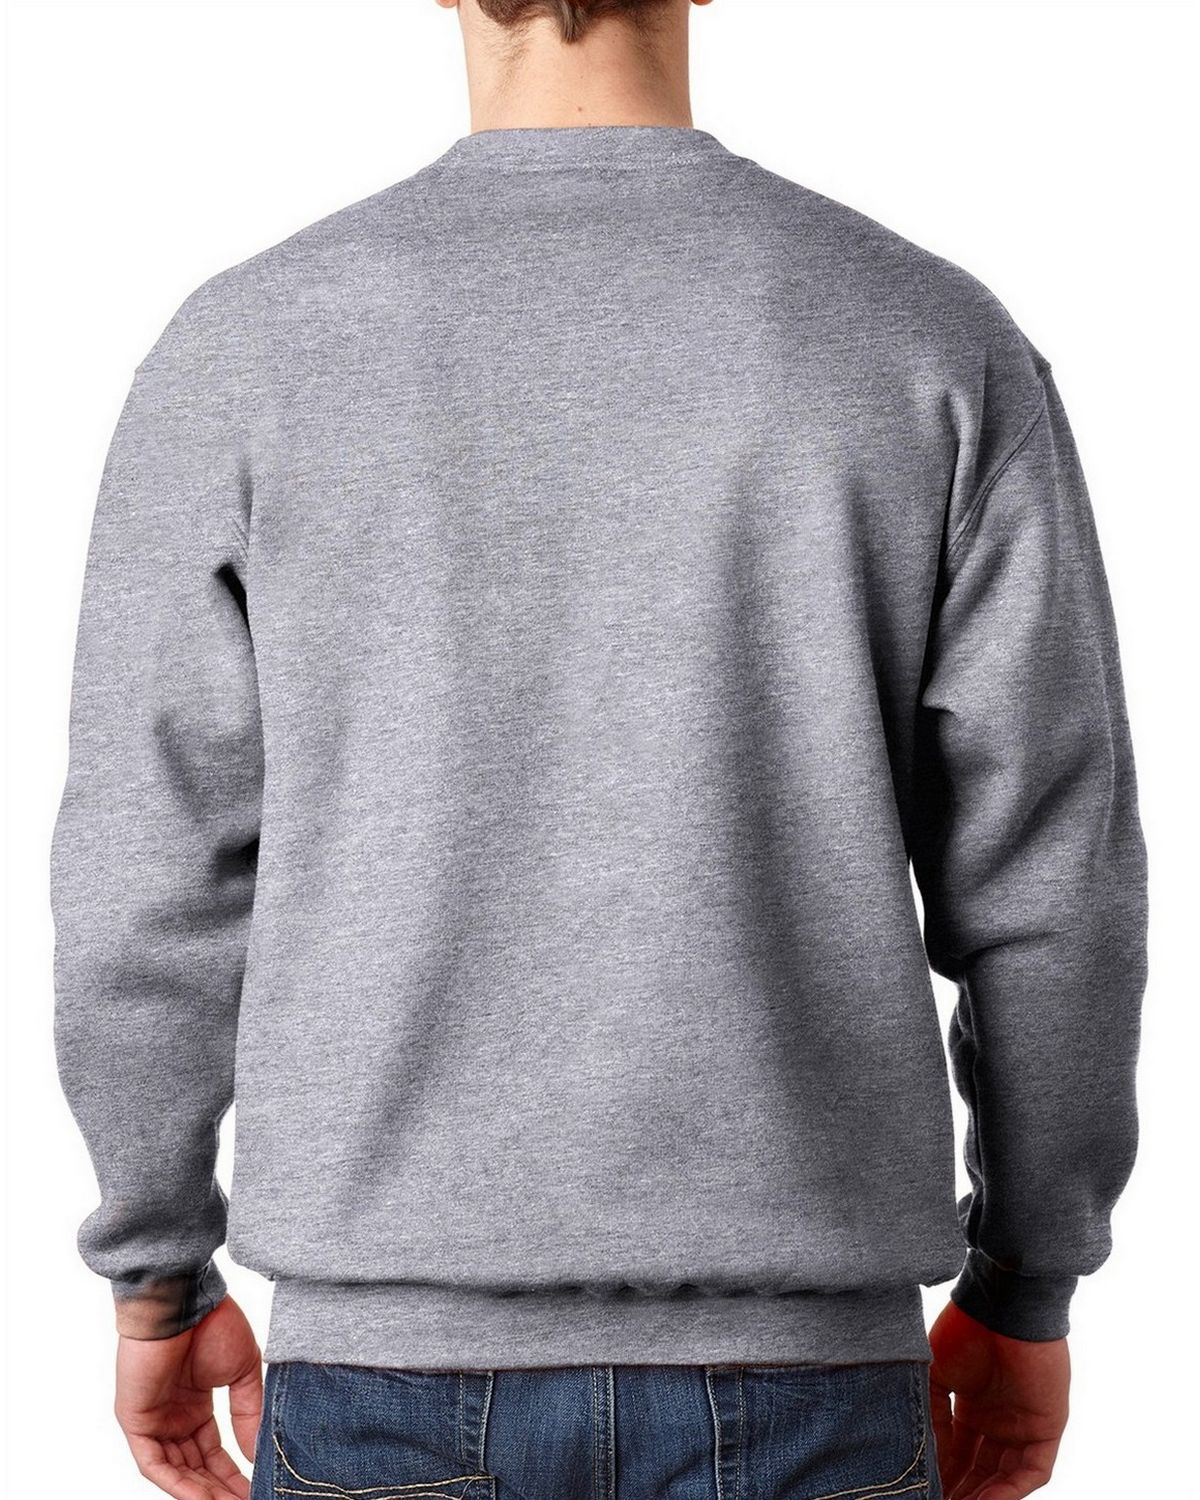 Bayside BA1102 Adult Crewneck Sweatshirt - Apparelnbags.com